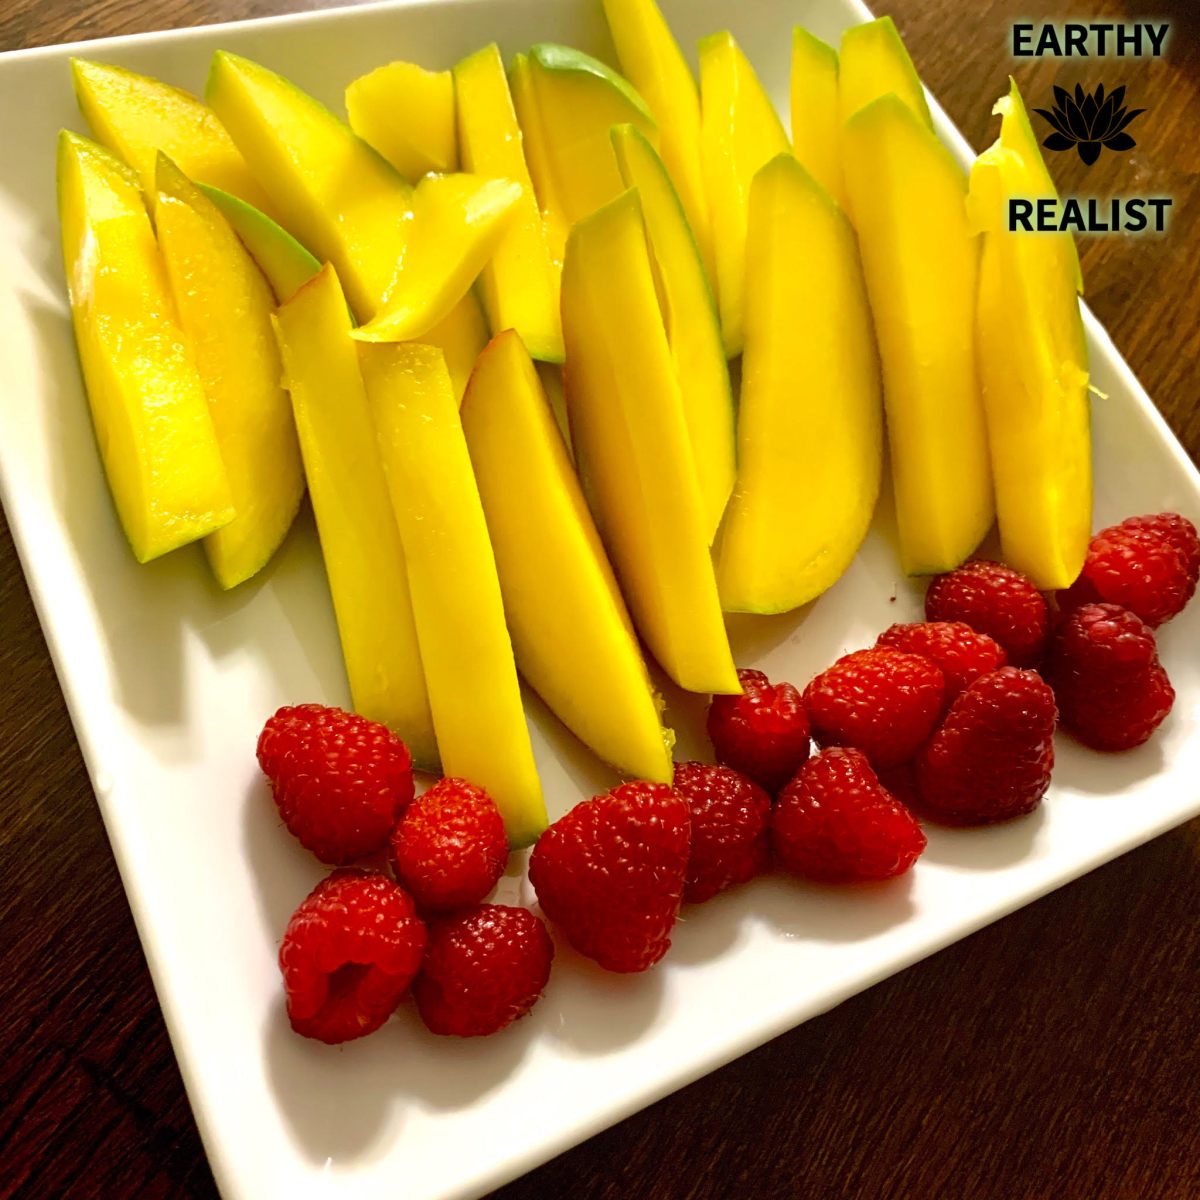 Healthy Eats: The Benefits of Mangoes & Raspberries